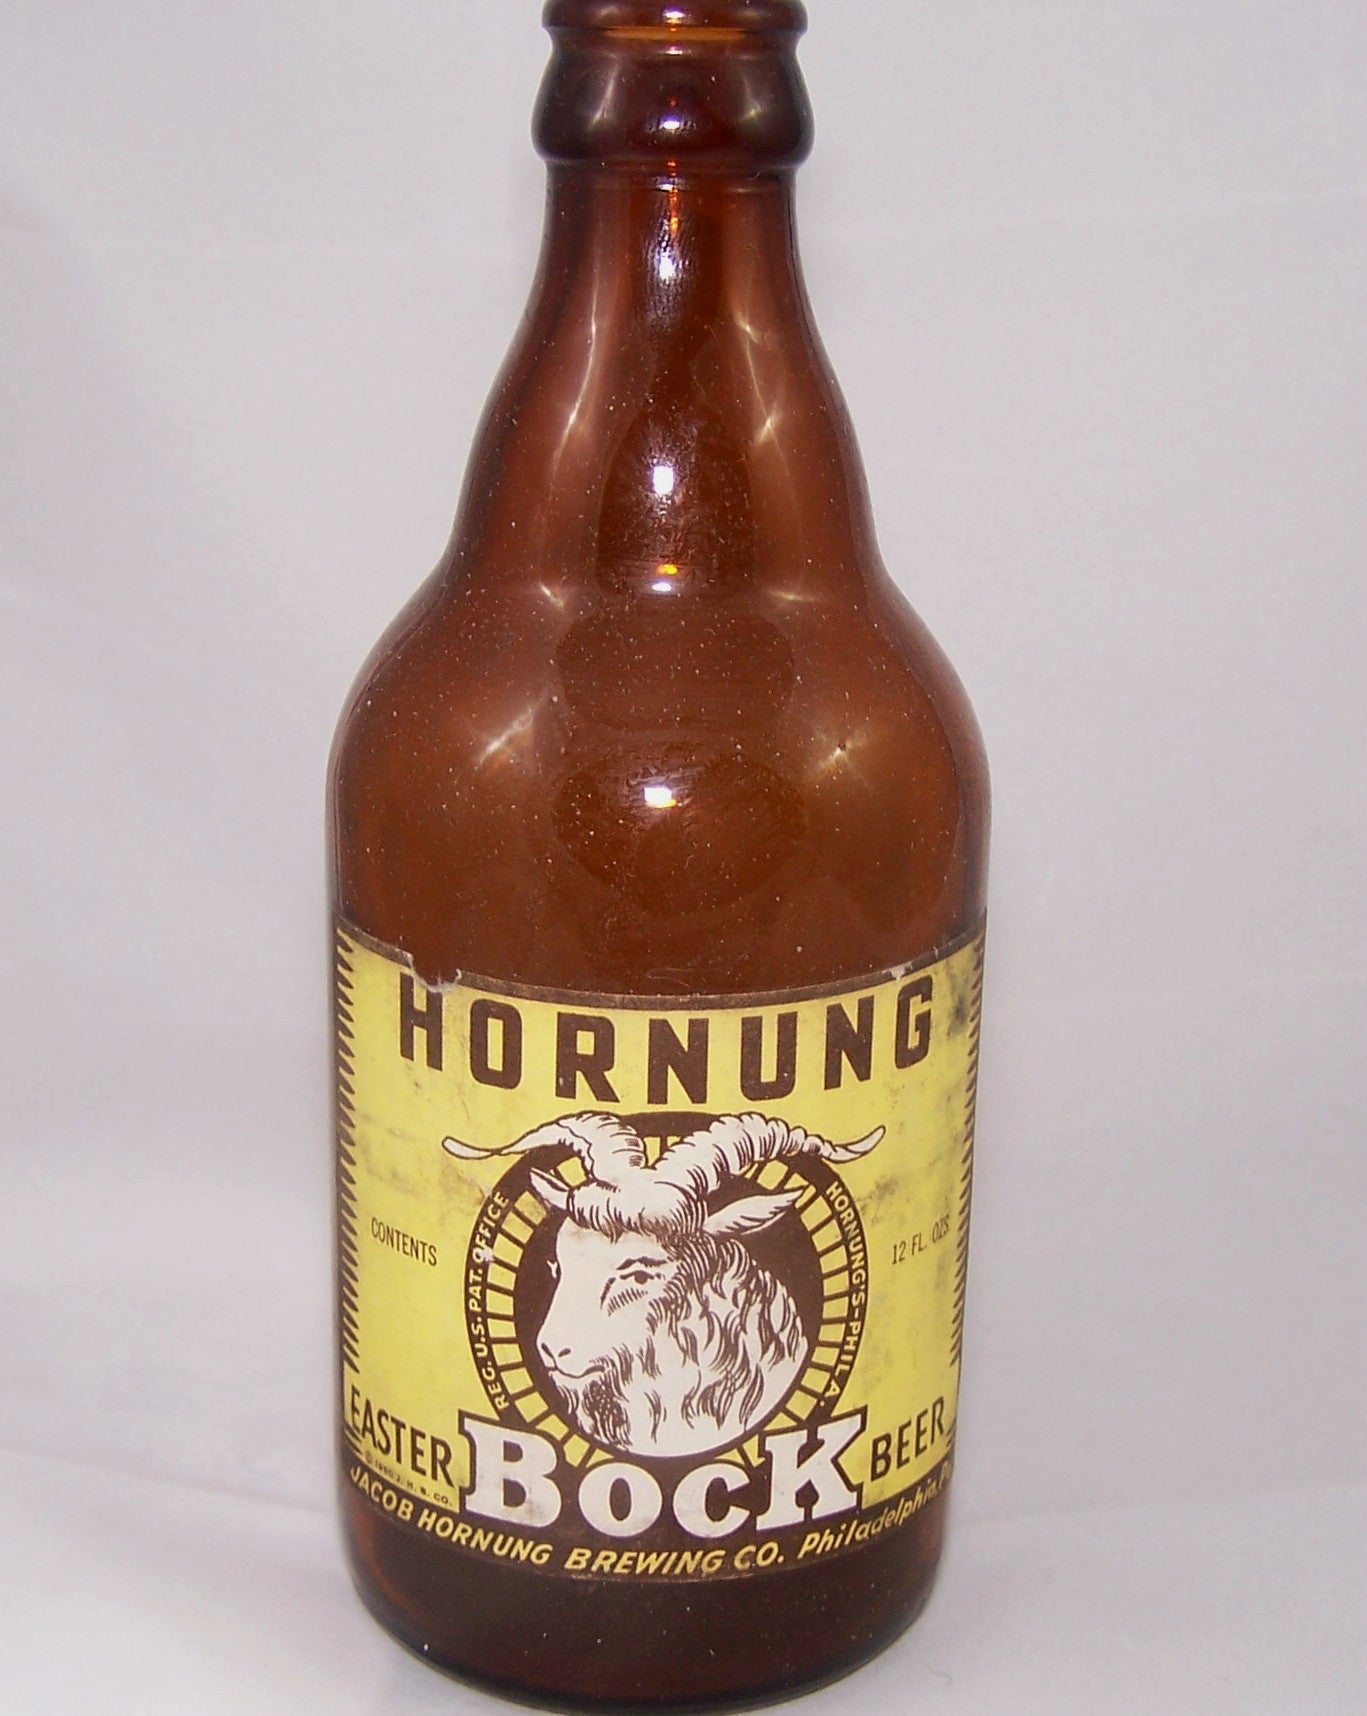 Hornung Easter Bock Beer Steinie, Non-IRTP Sold on 2/24/15